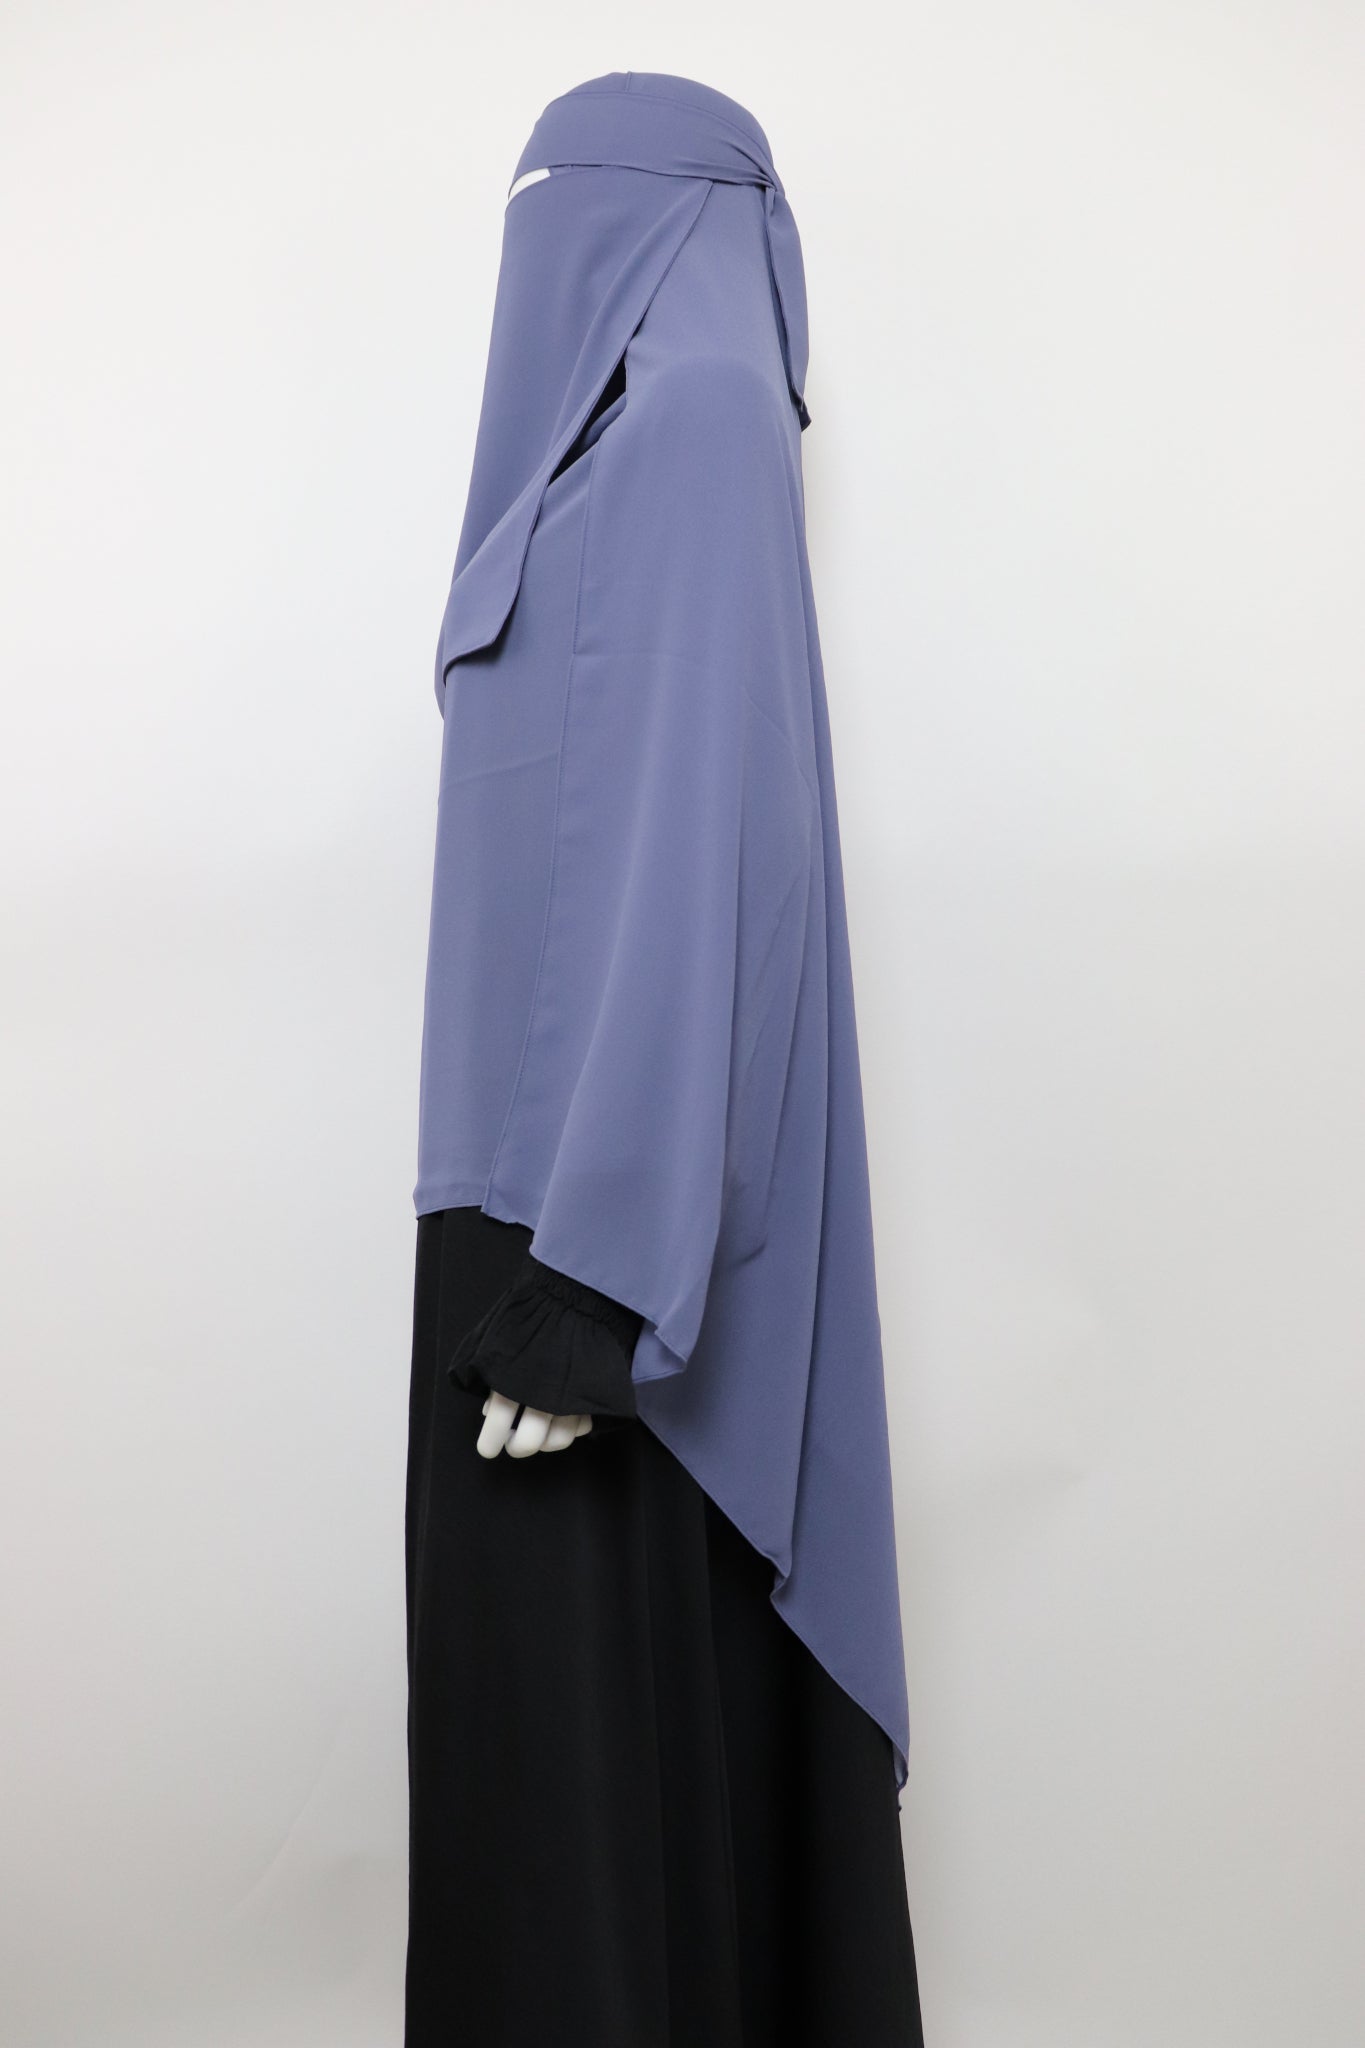 XL Premium Chiffon Hijab and Niqab Set - Dusty Blue